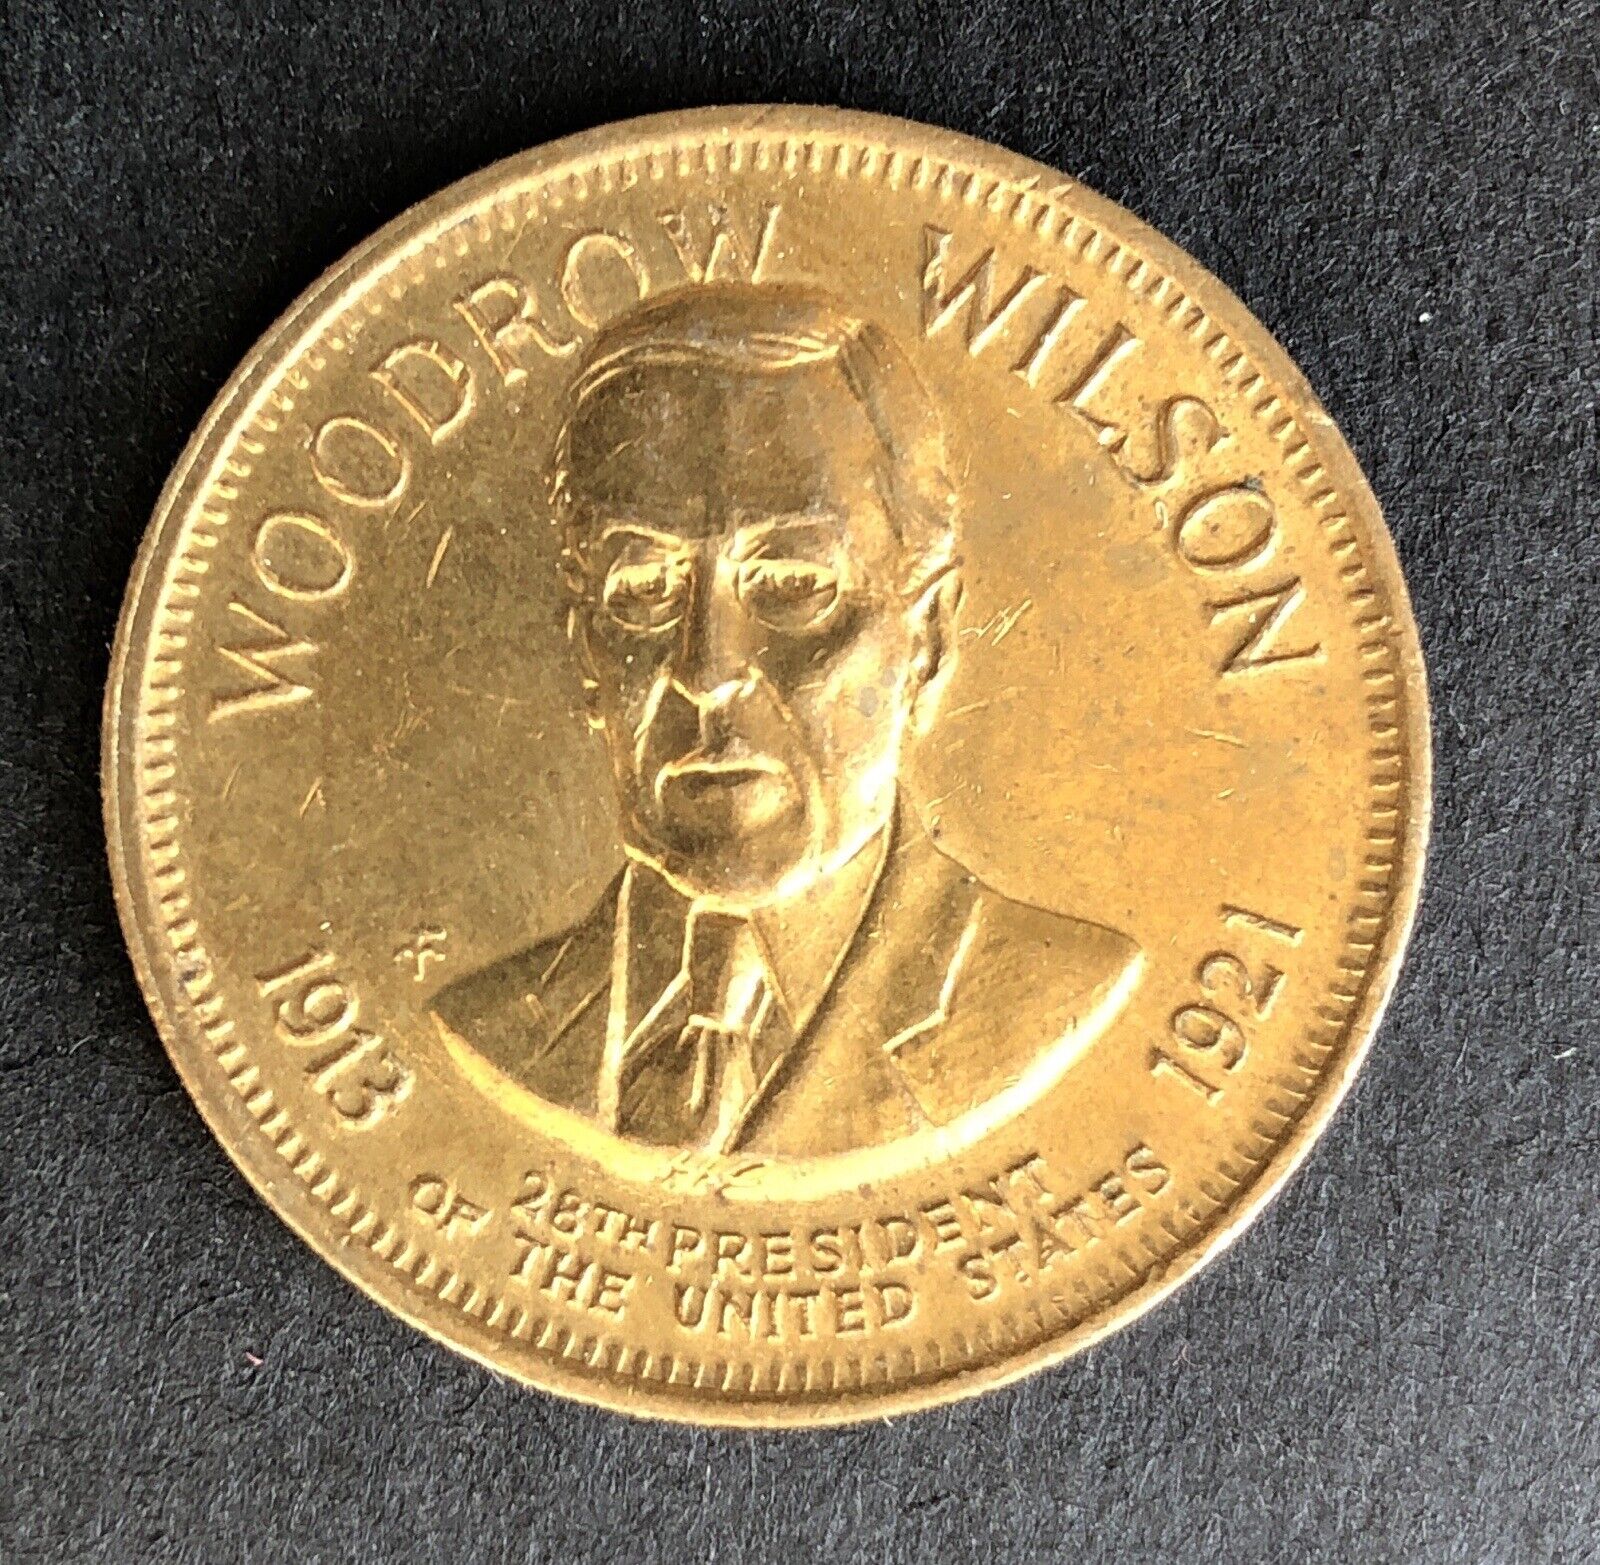 Franklin Mint President Woodrow Wilson Commemorative Coin, Token